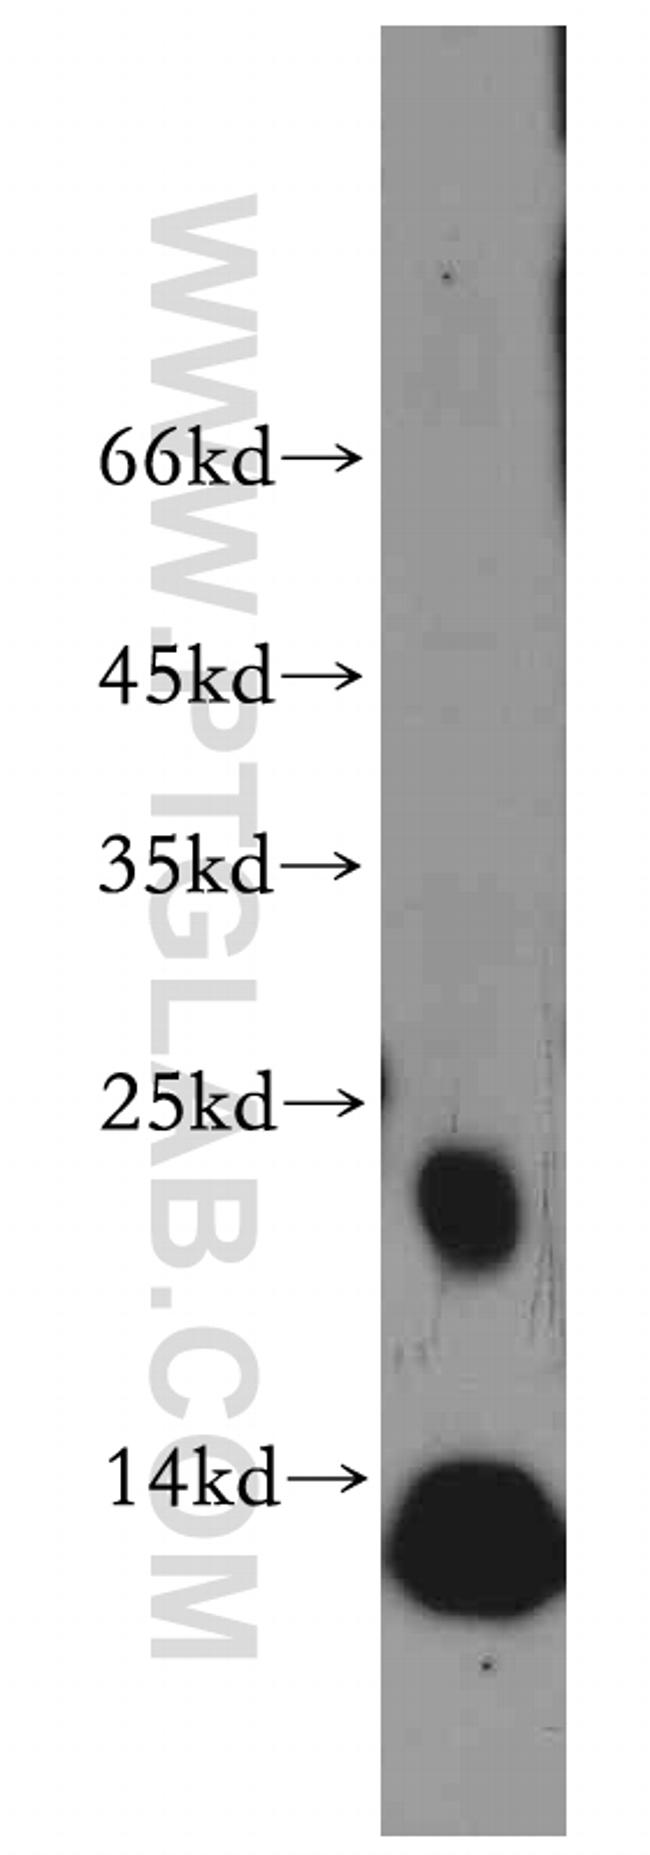 RAC2 Antibody in Western Blot (WB)